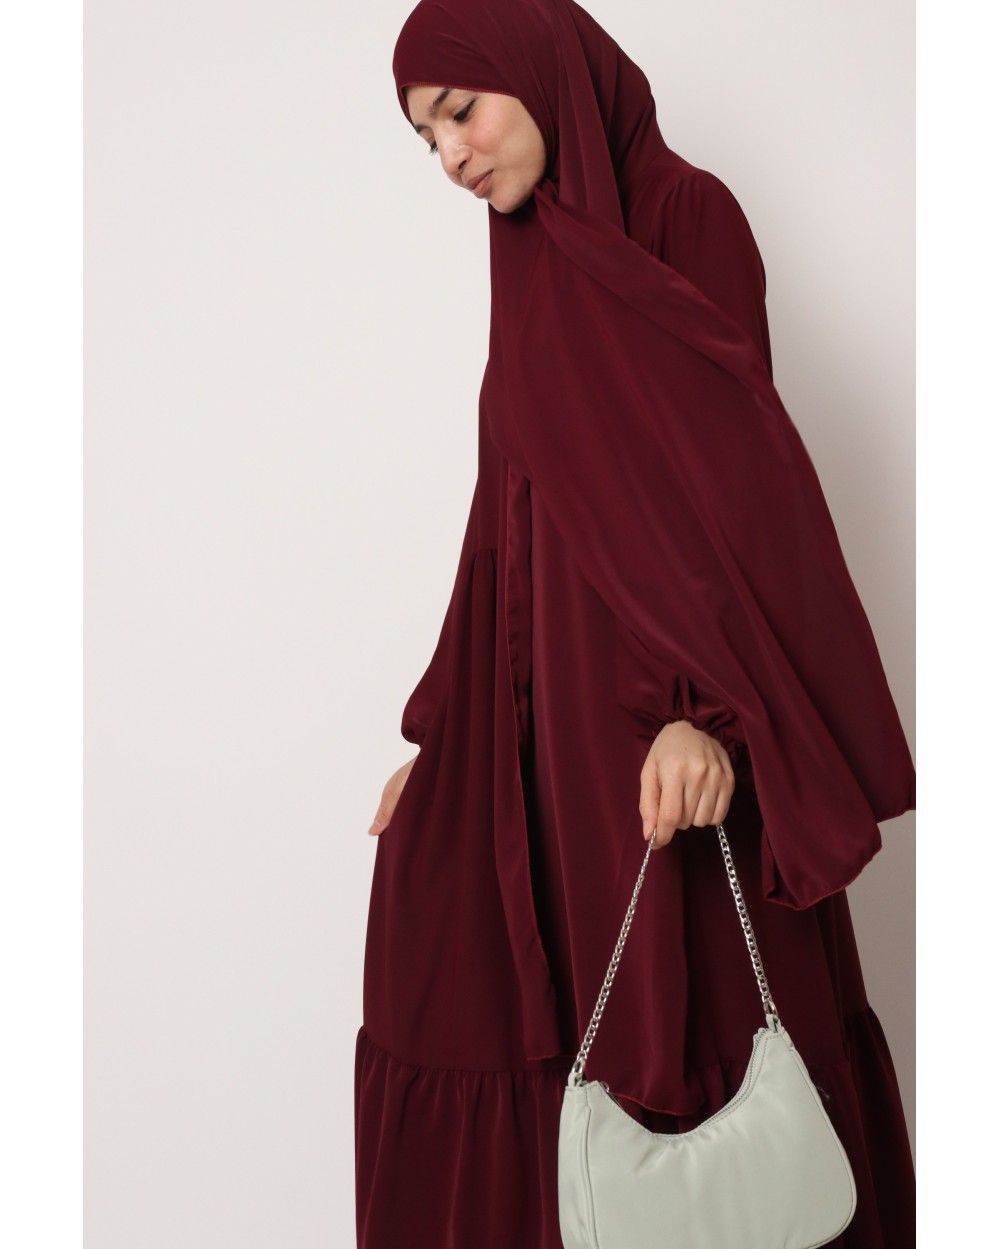 Integrated hijab ruffled dress